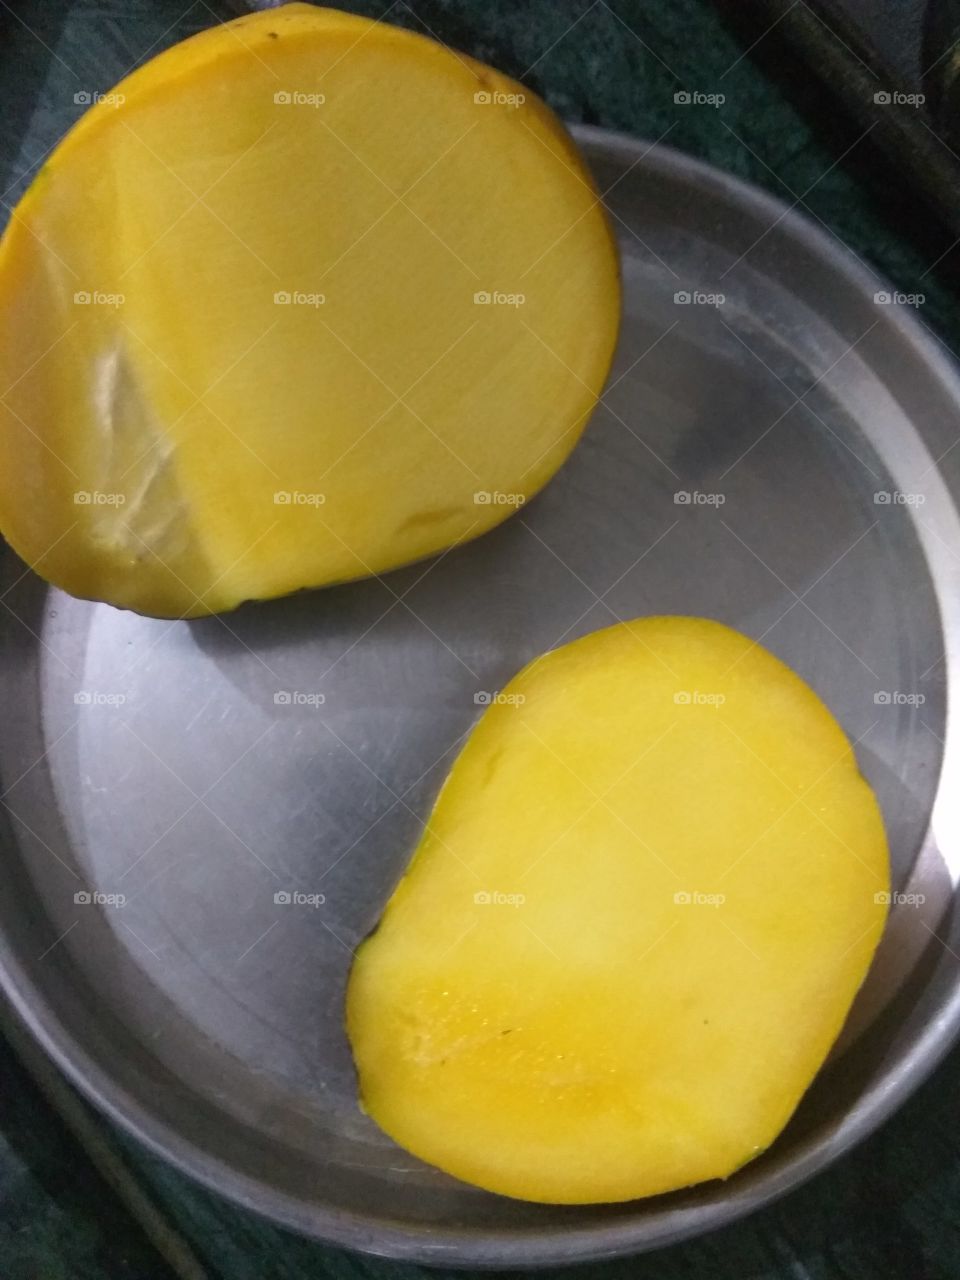 My love for mangos